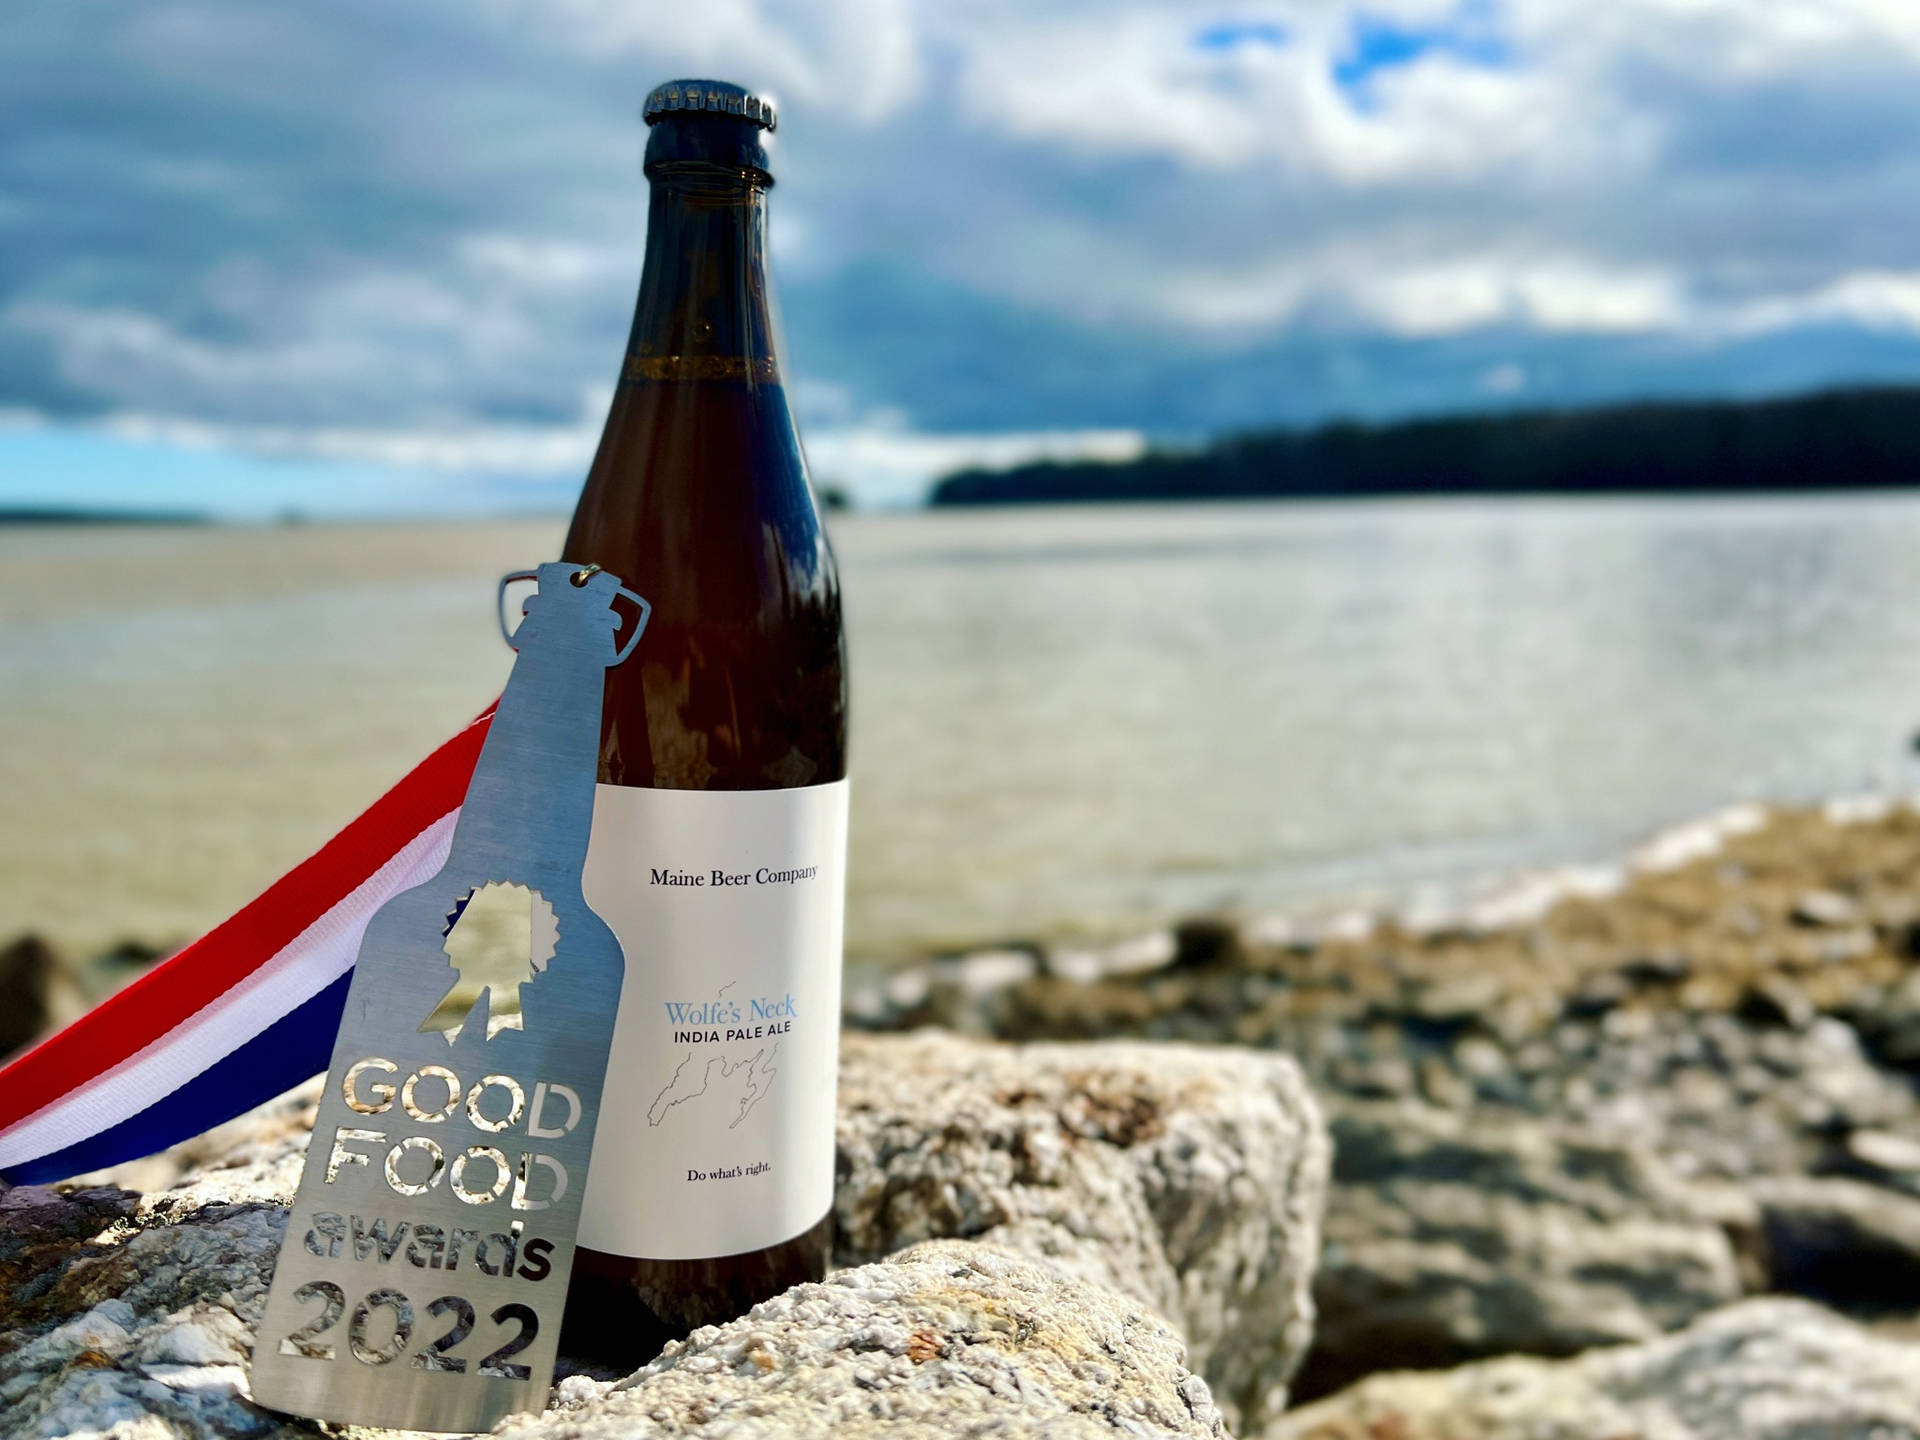 Maine Beer Company Good Food Awards Beach Wallpaper